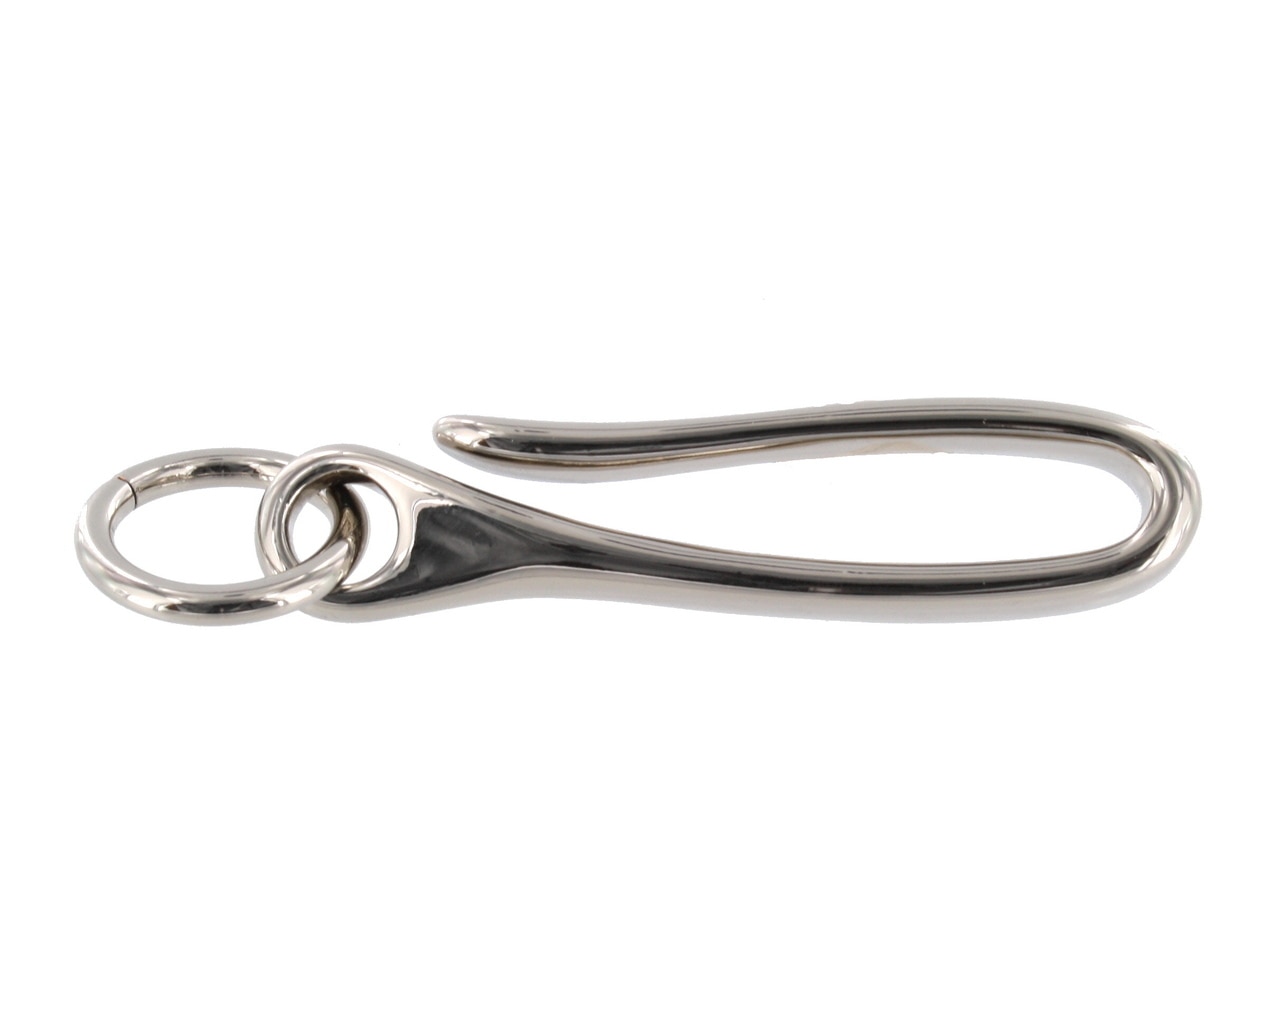 SanFilippoLeather Mens Hook Key Chain / Brass or Nickel Hook / Fish Hook / Key Ring / Belt Hook / Metal Key Chain / Gold Silver Key Chain / Mens Style Fashion